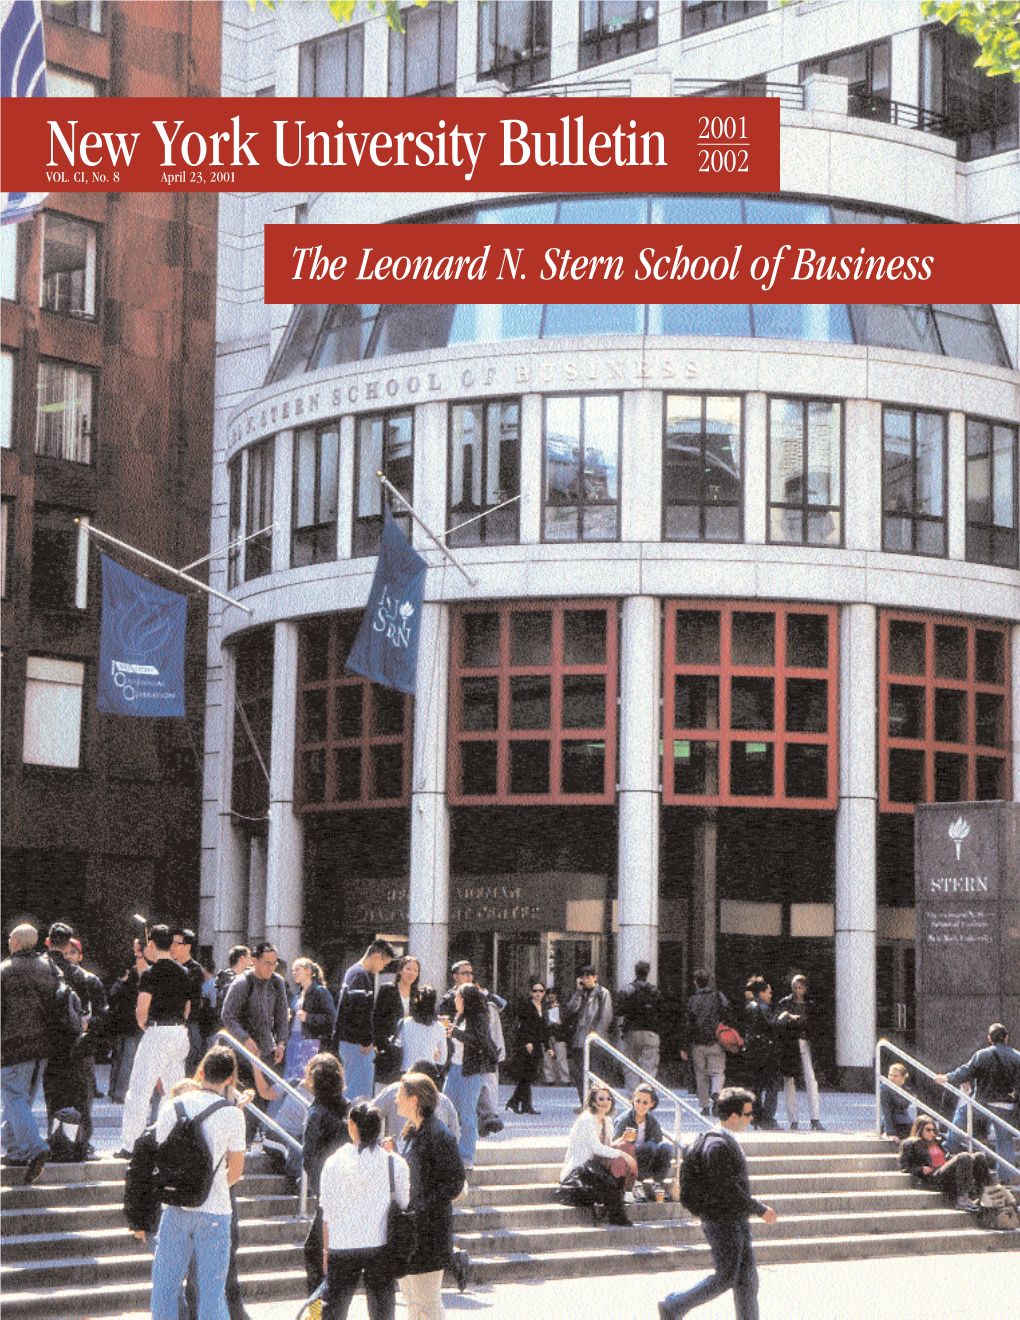 New York University Bulletin 2002 VOL